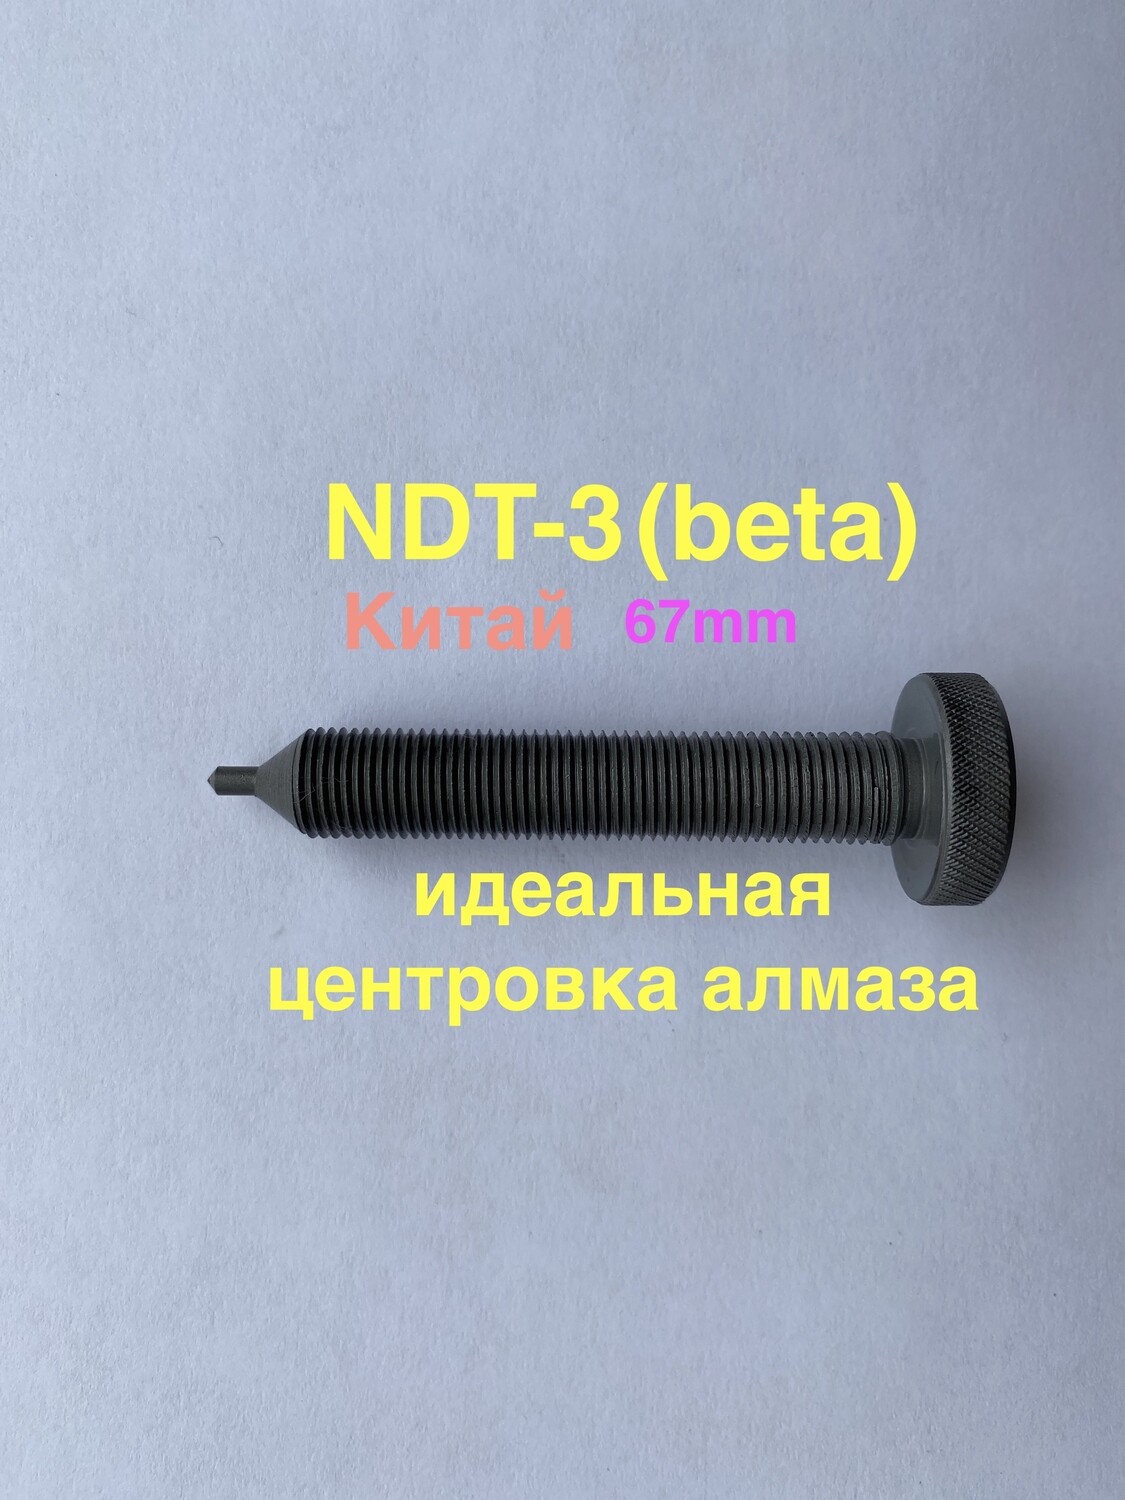 NDT3  (beta) ProSharp L67mm  CVD 4.5mm (for Z-channel) пр-во Китай